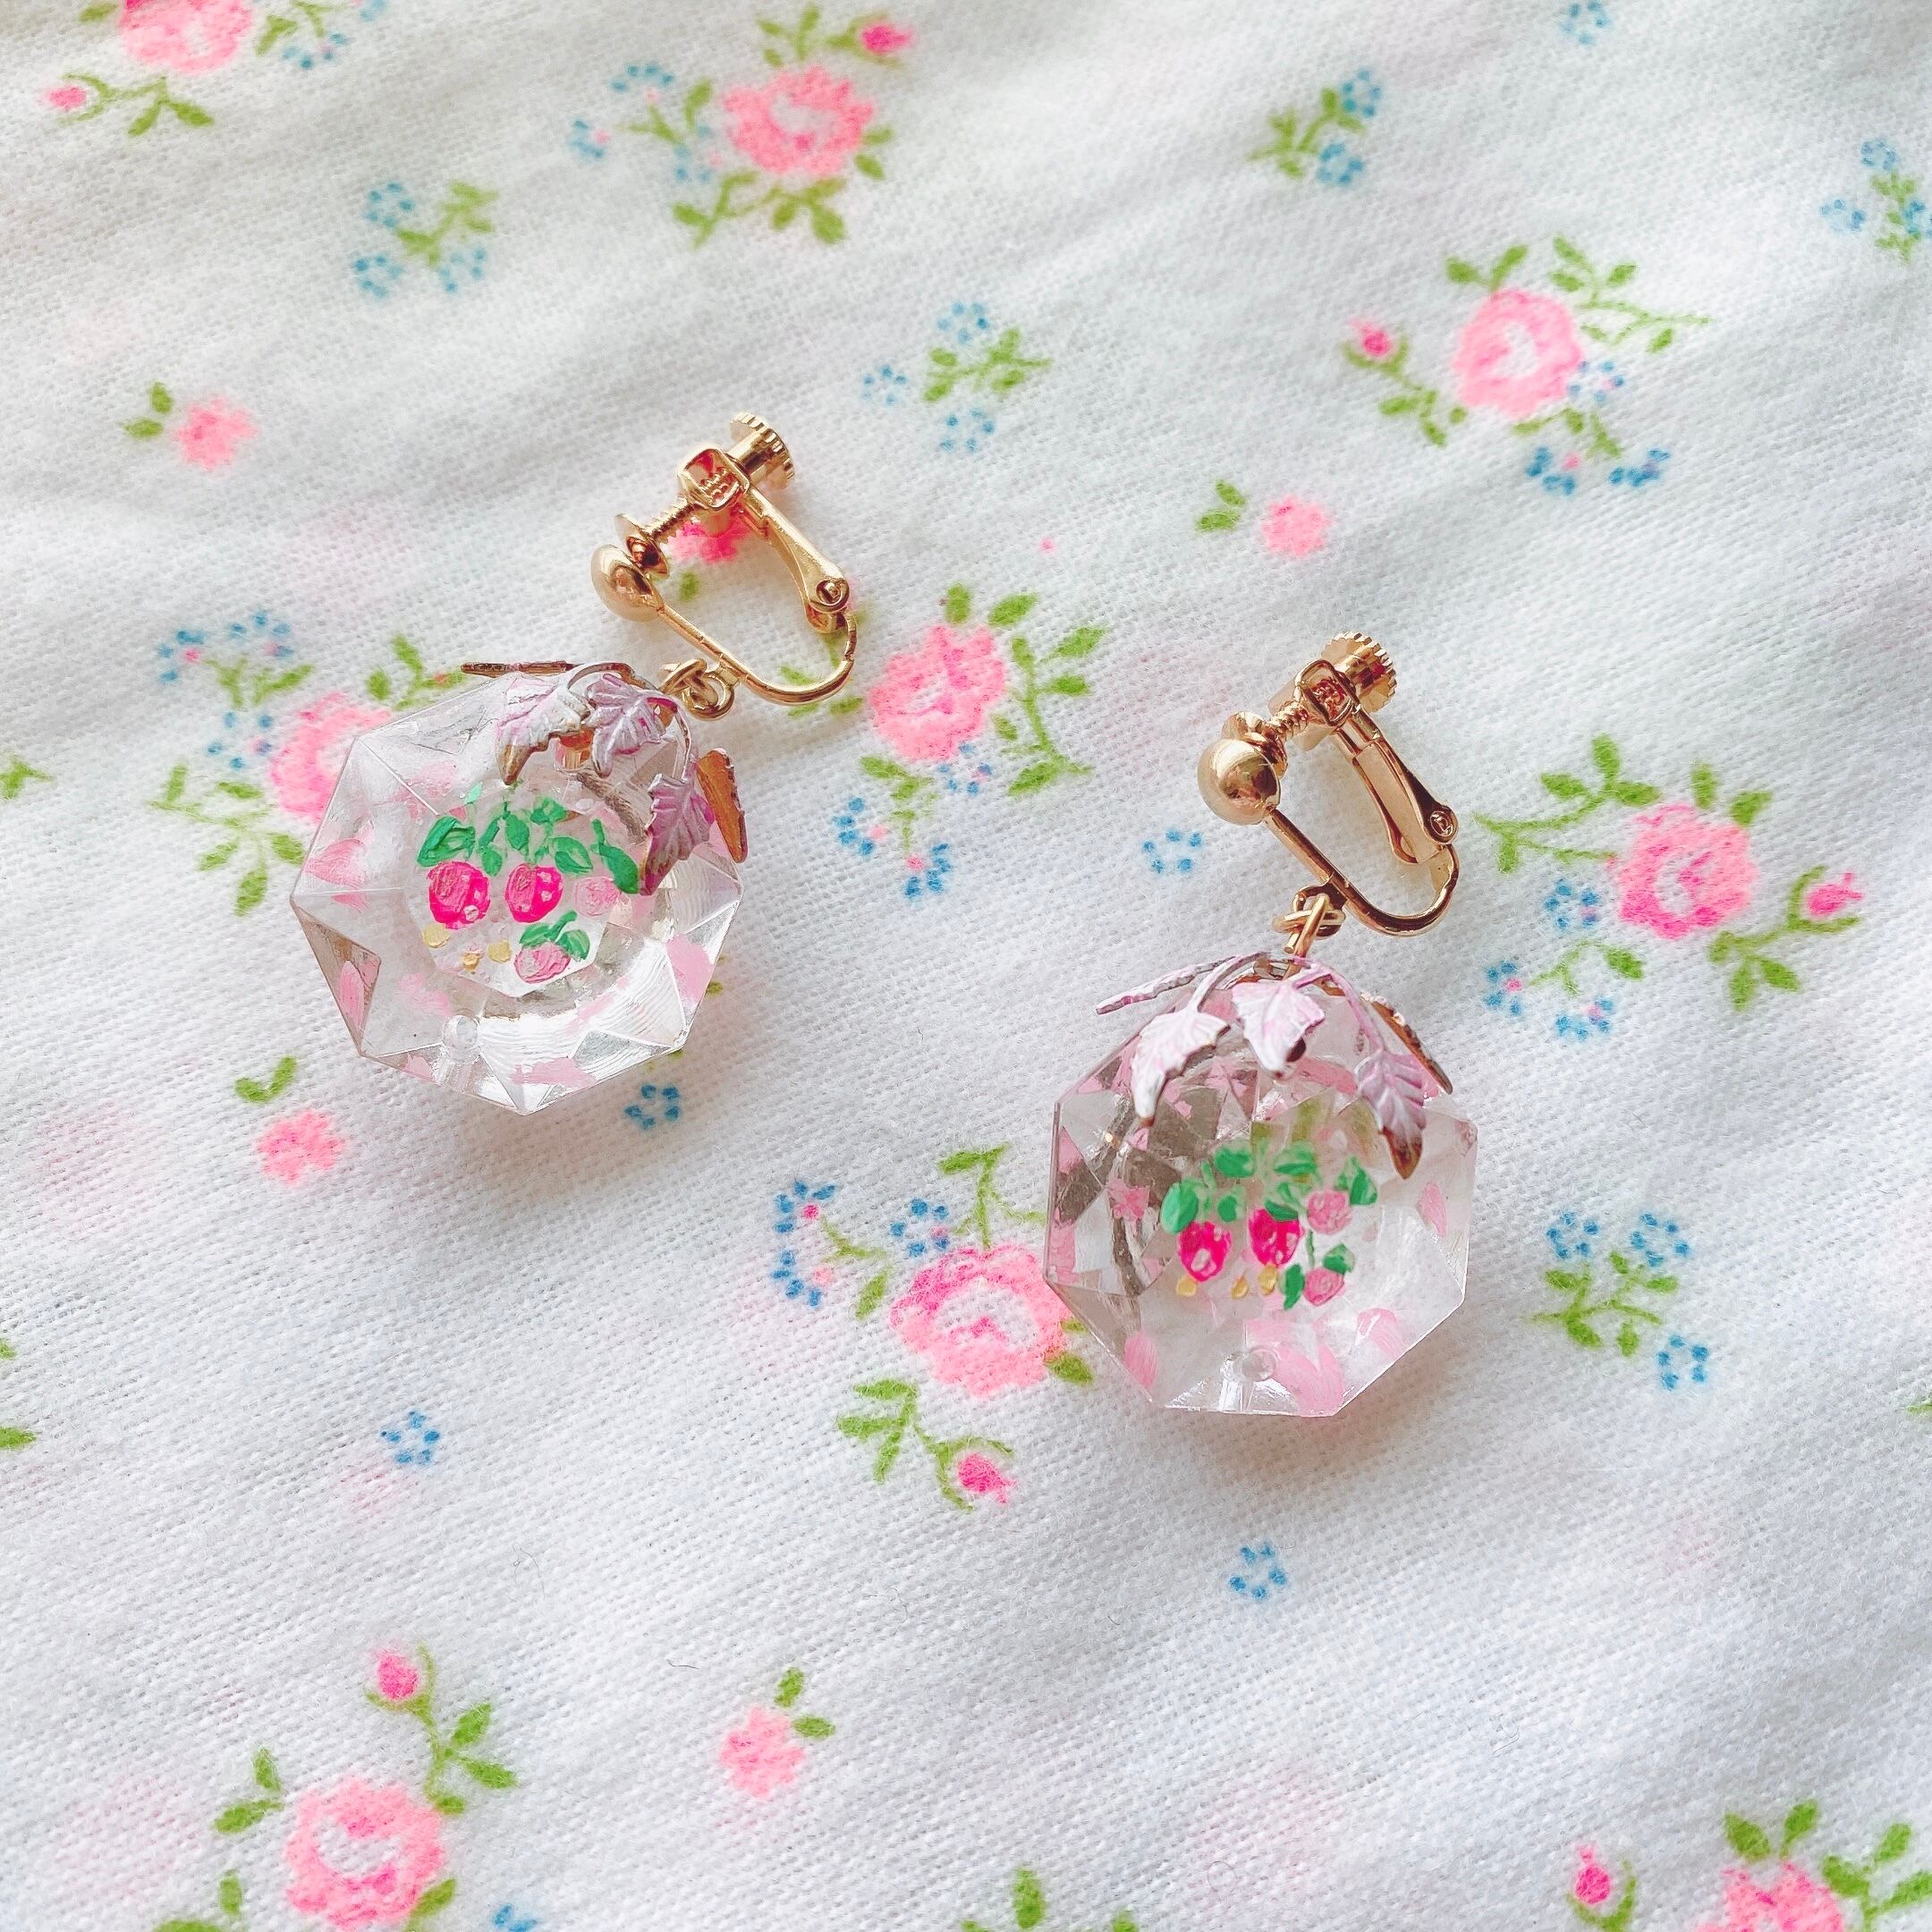 Strawberry hand paint chandelier earrings いちごばたけのイヤリング b.